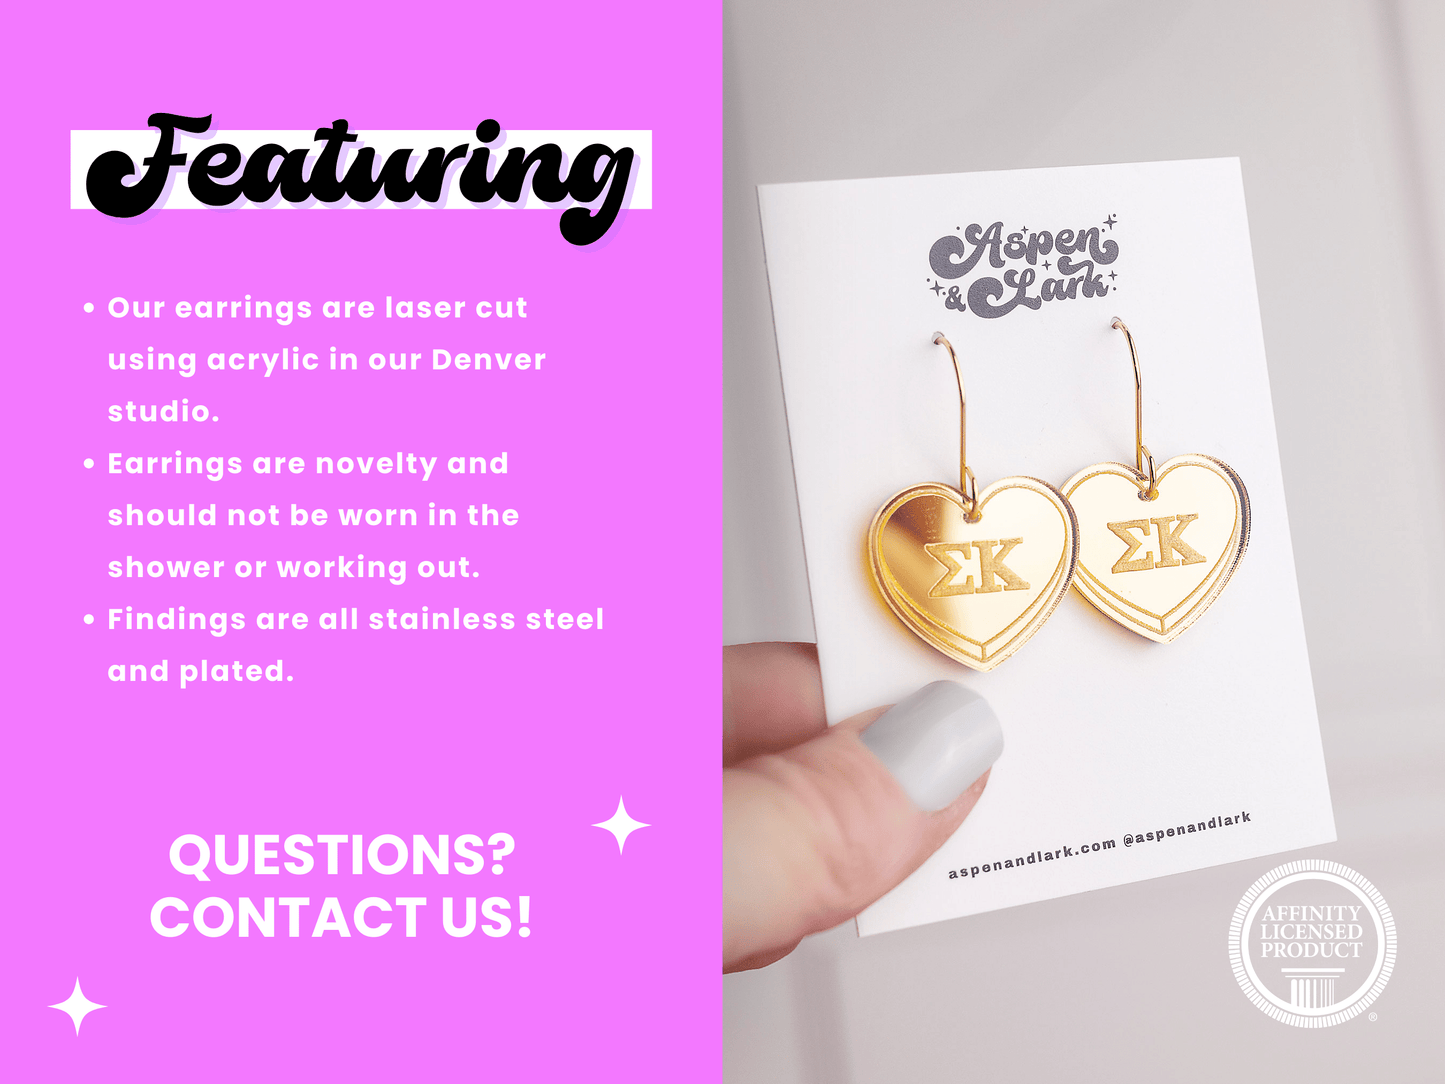 Sigma Kappa Earrings - Sorority Earrings - Mirror Conversation Hearts in Gold Pink or Silver